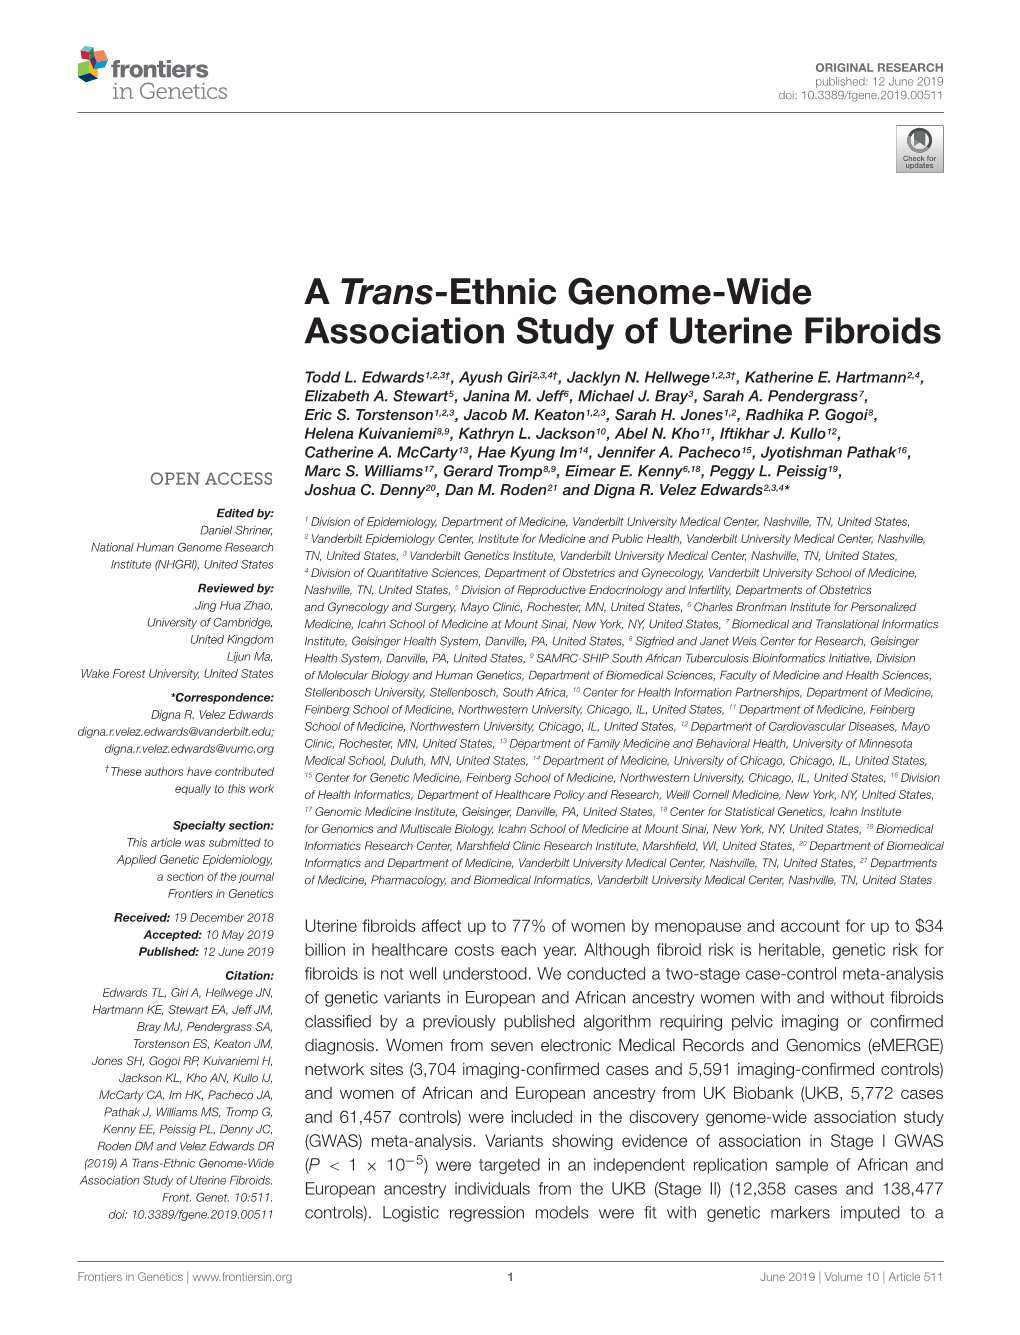 A Trans-Ethnic Genome-Wide Association Study of Uterine Fibroids